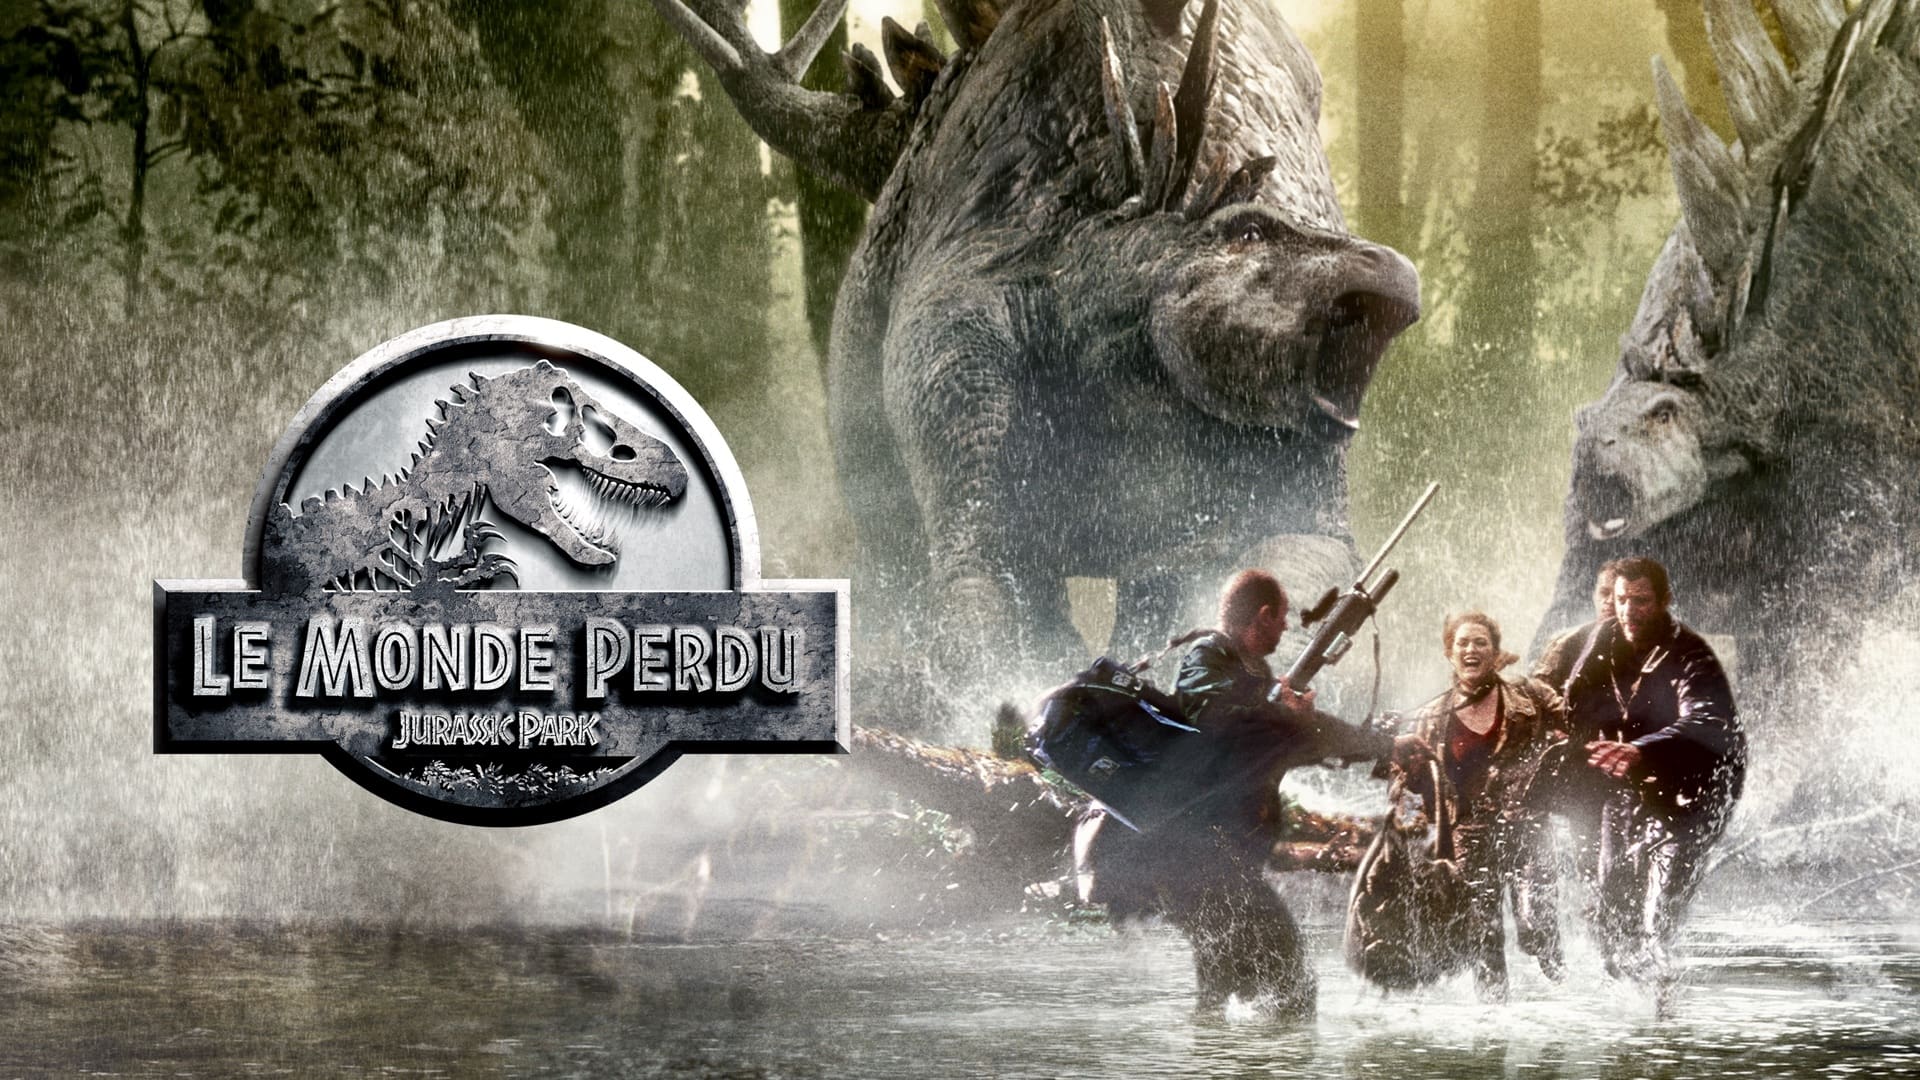 Image du film Le Monde perdu : Jurassic Park 4humooqmdun1lrjyiyxvryguq54jpg